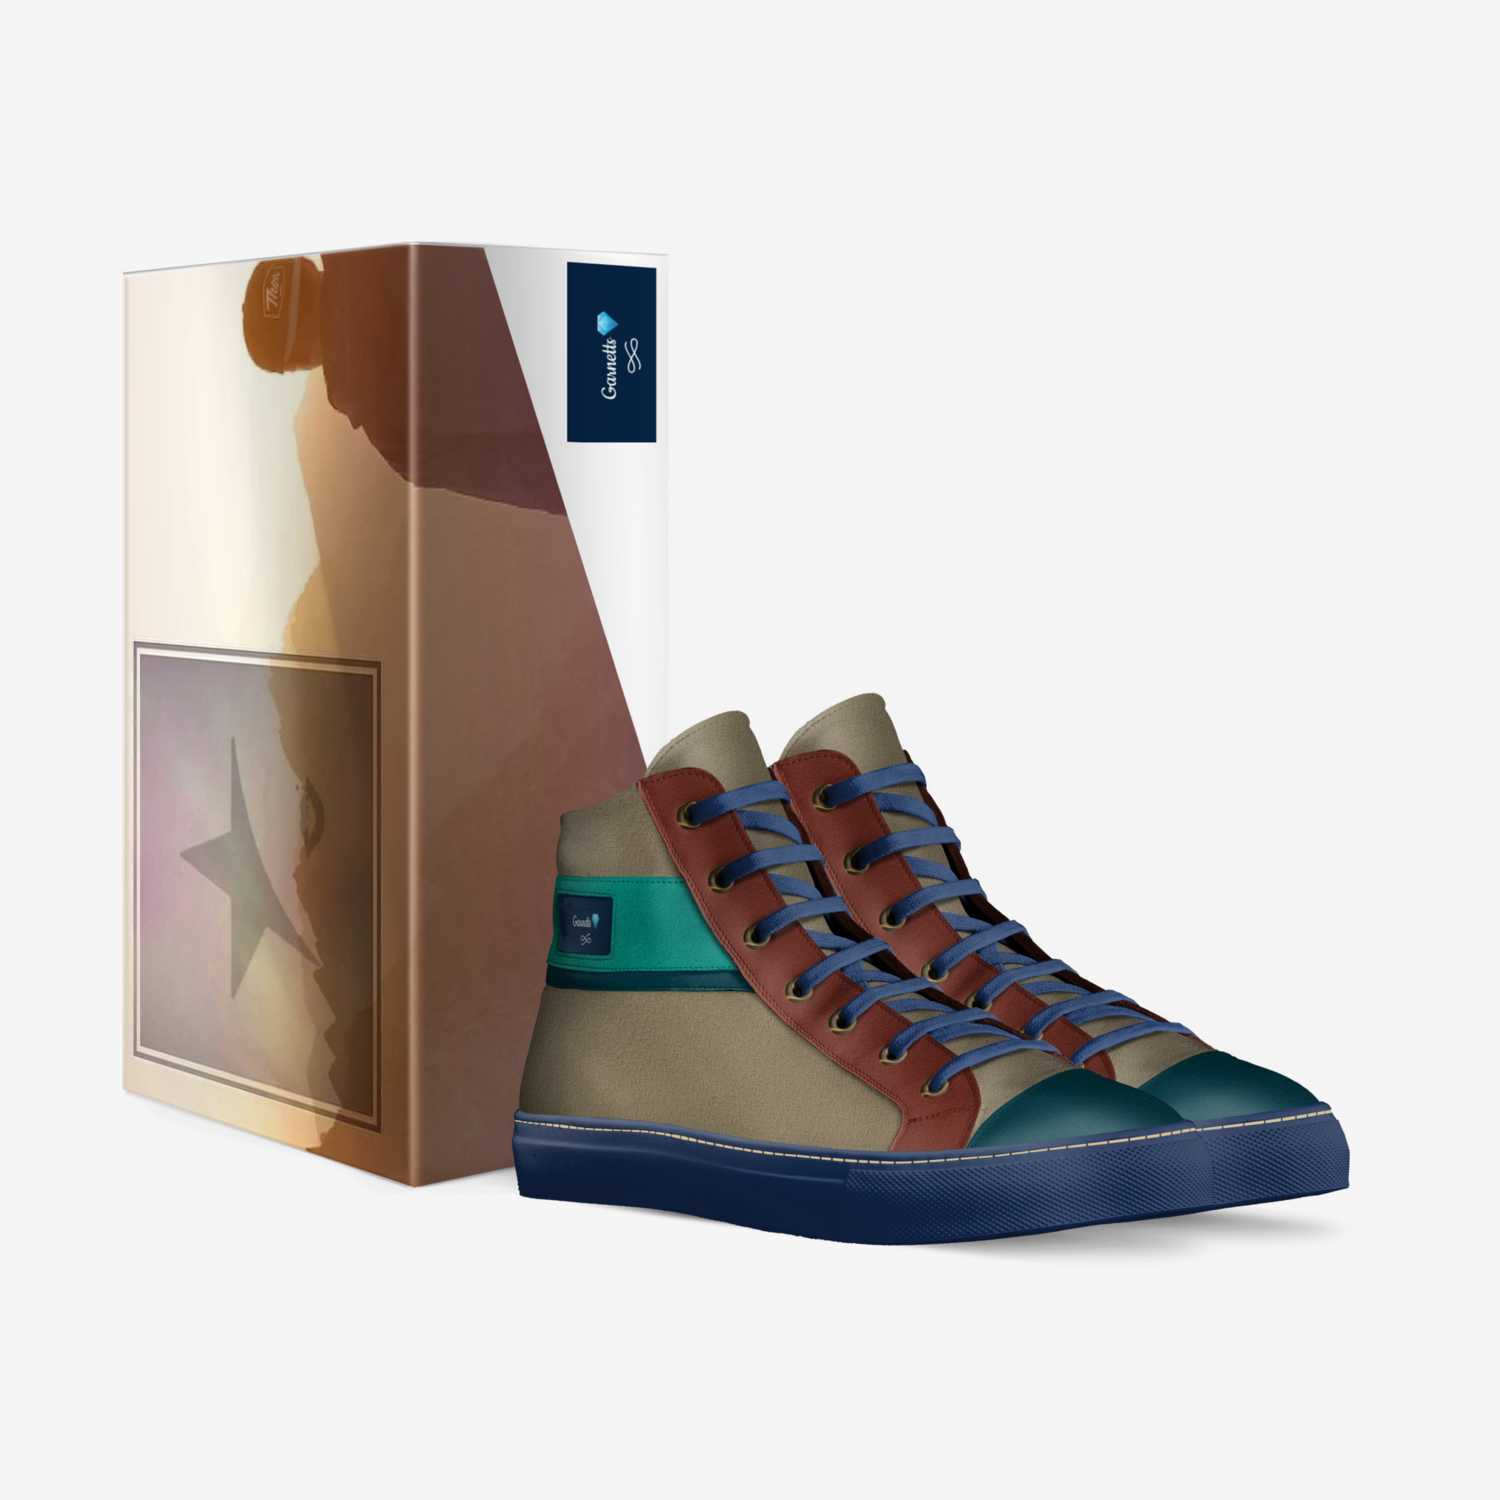 Garnetts◇ custom made in Italy shoes by Aquayemi-claude Garnett Akinsanya | Box view